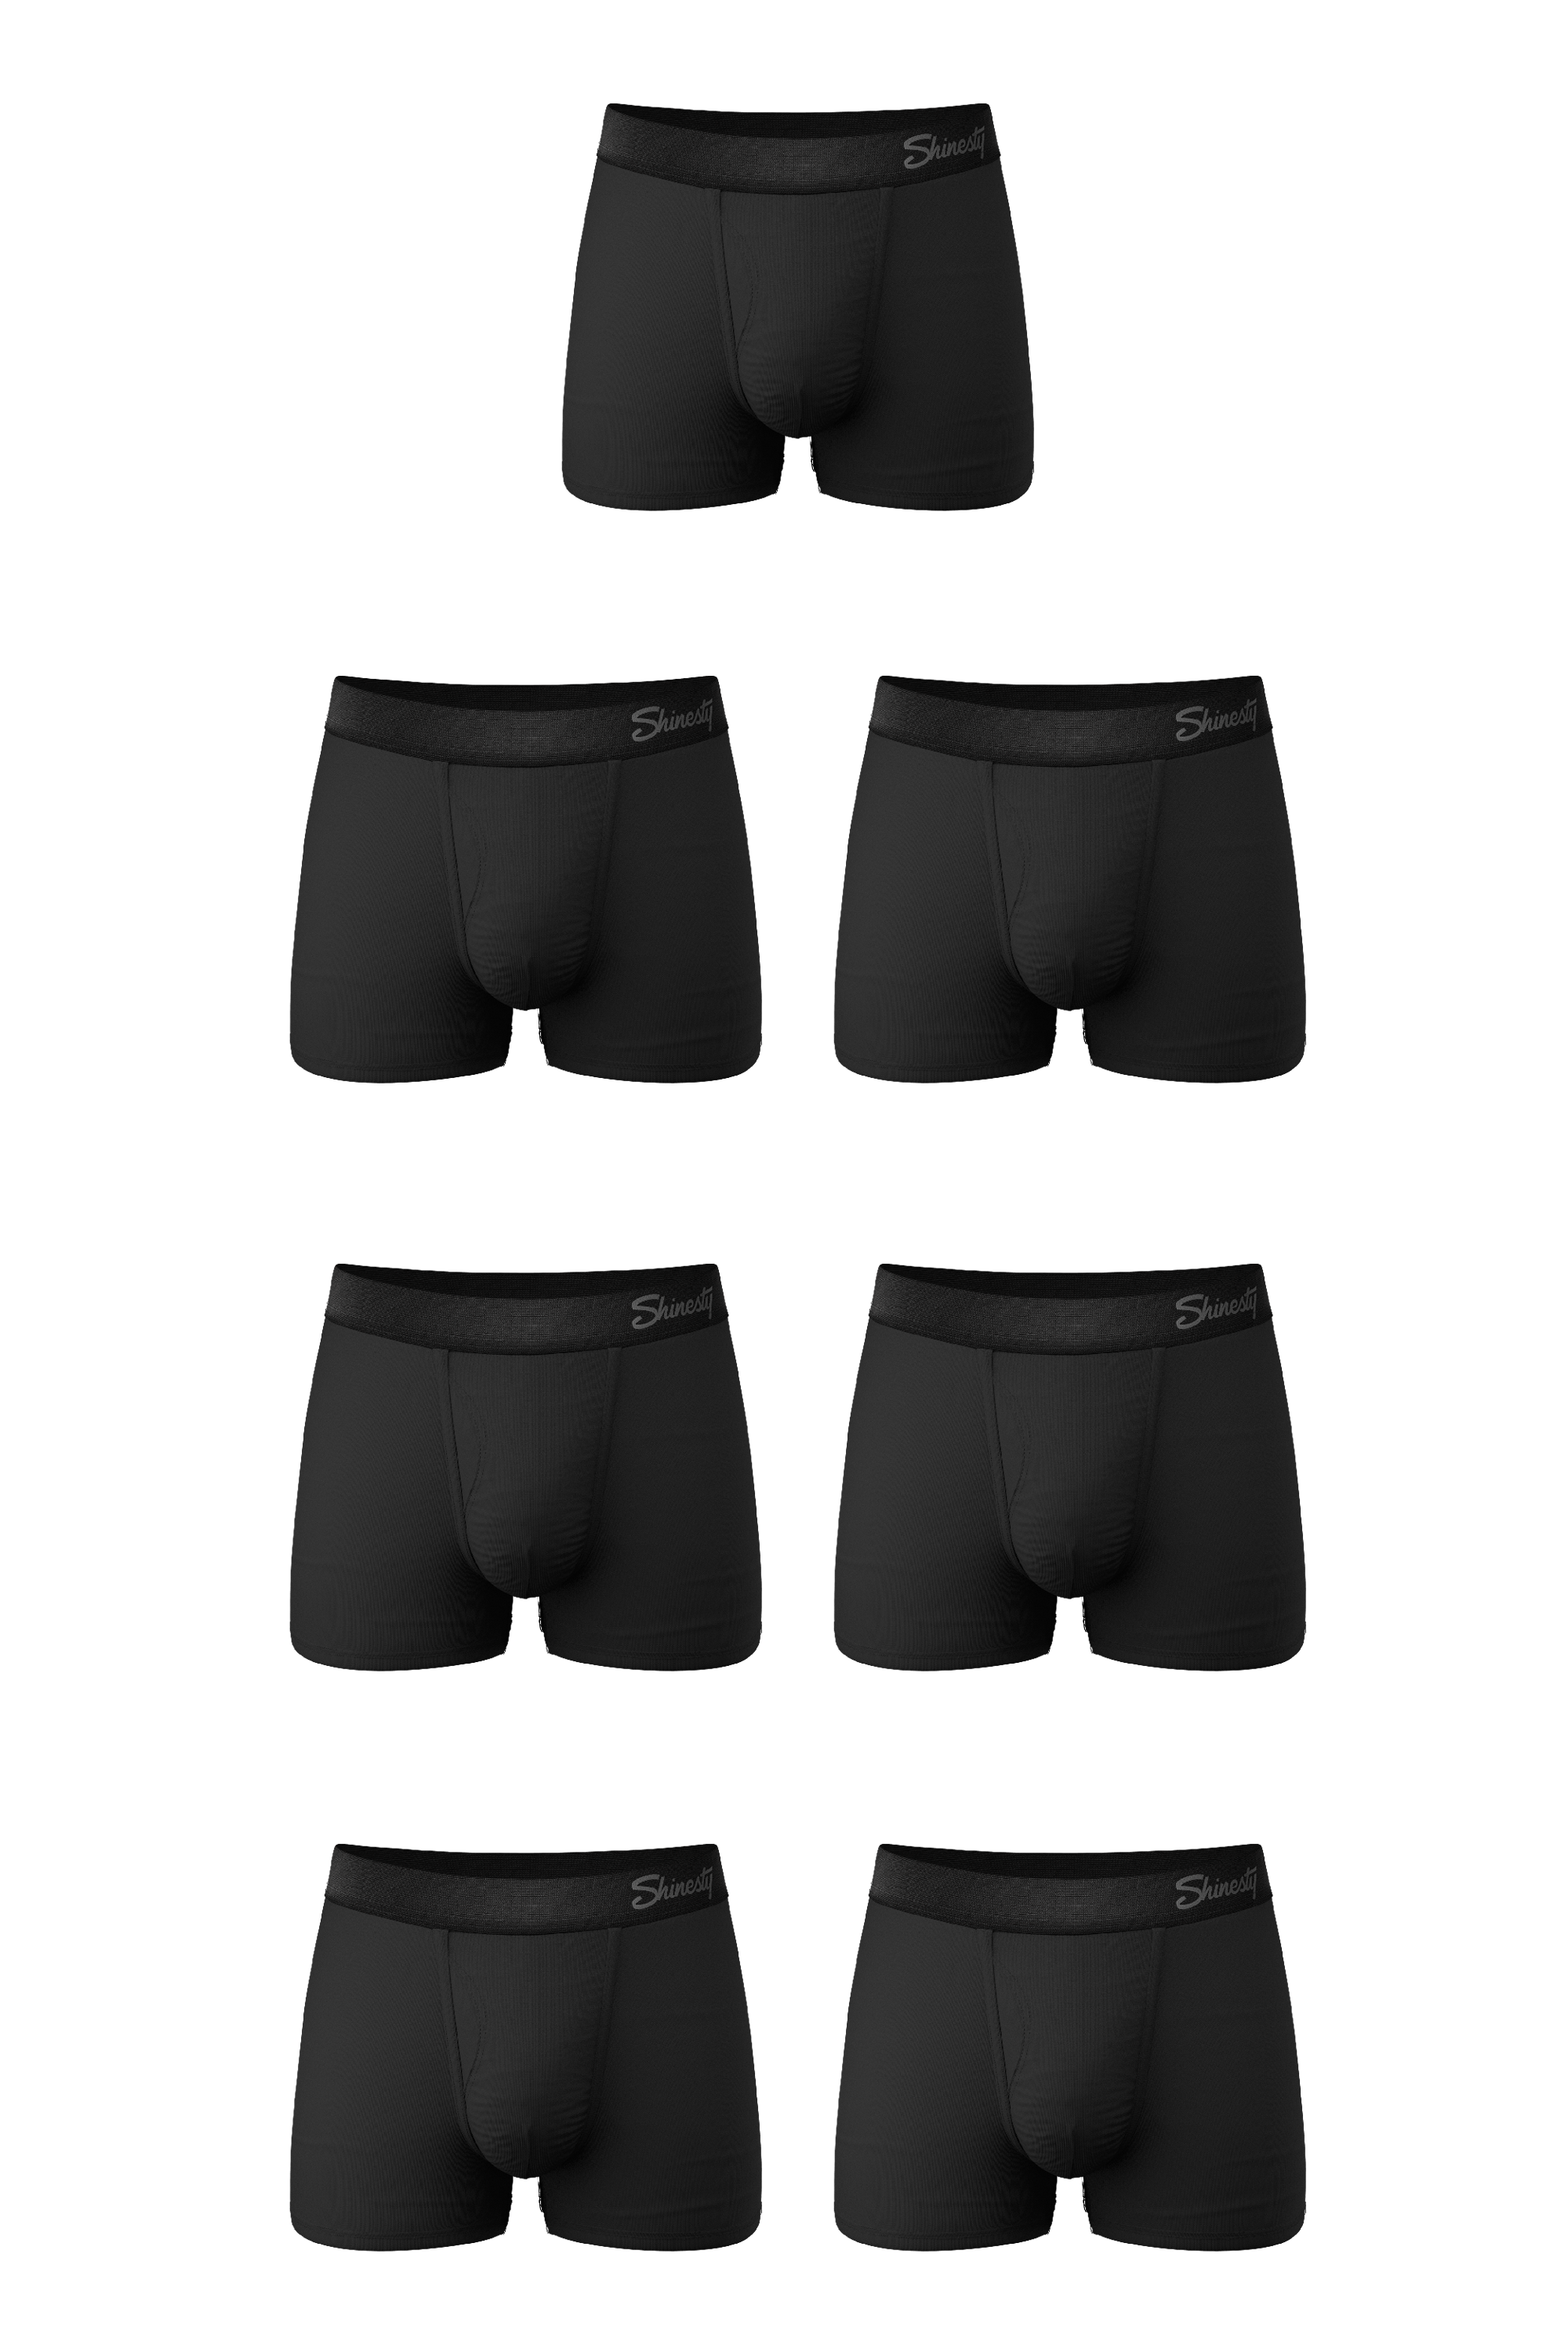 The Threat Level Midnight - Shinesty Black Ball Hammock Pouch Underwear  Large